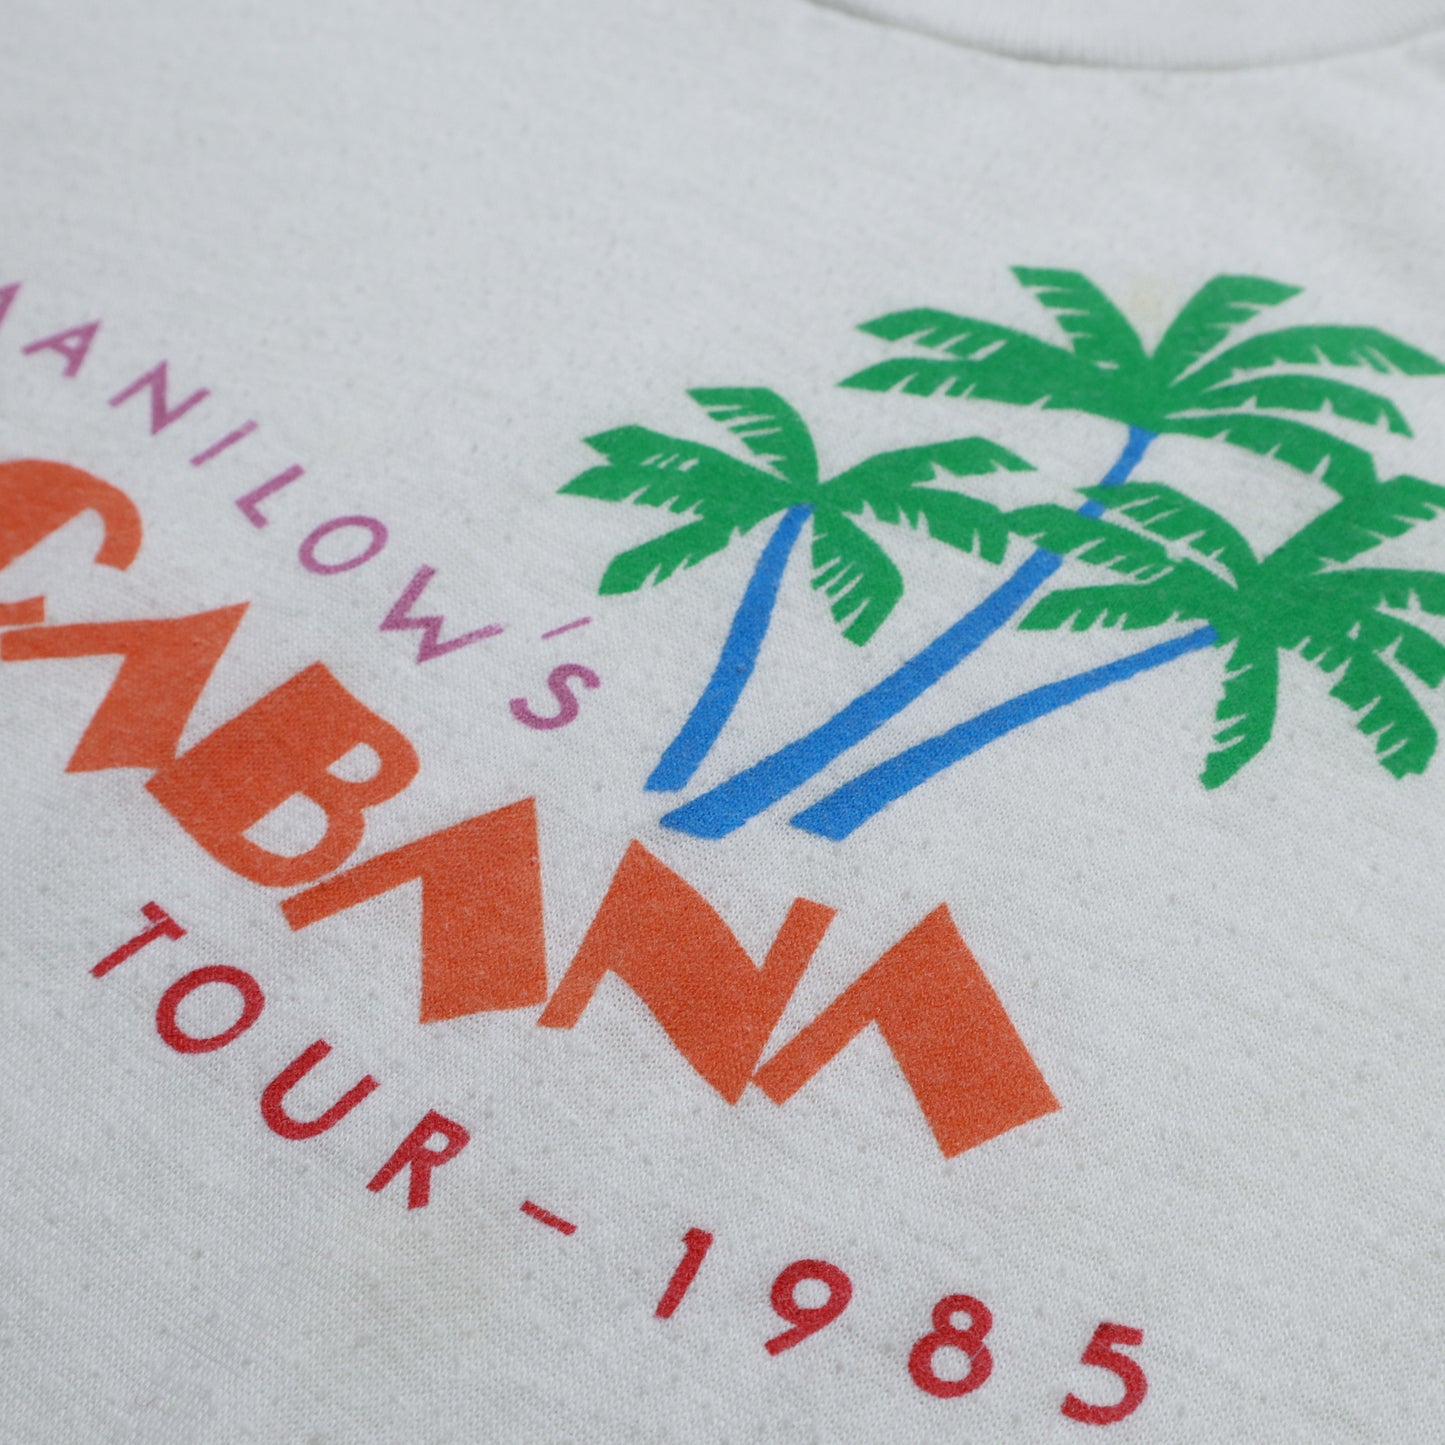 1980s American American singer Barry Manilow Copacabana T-Shirt